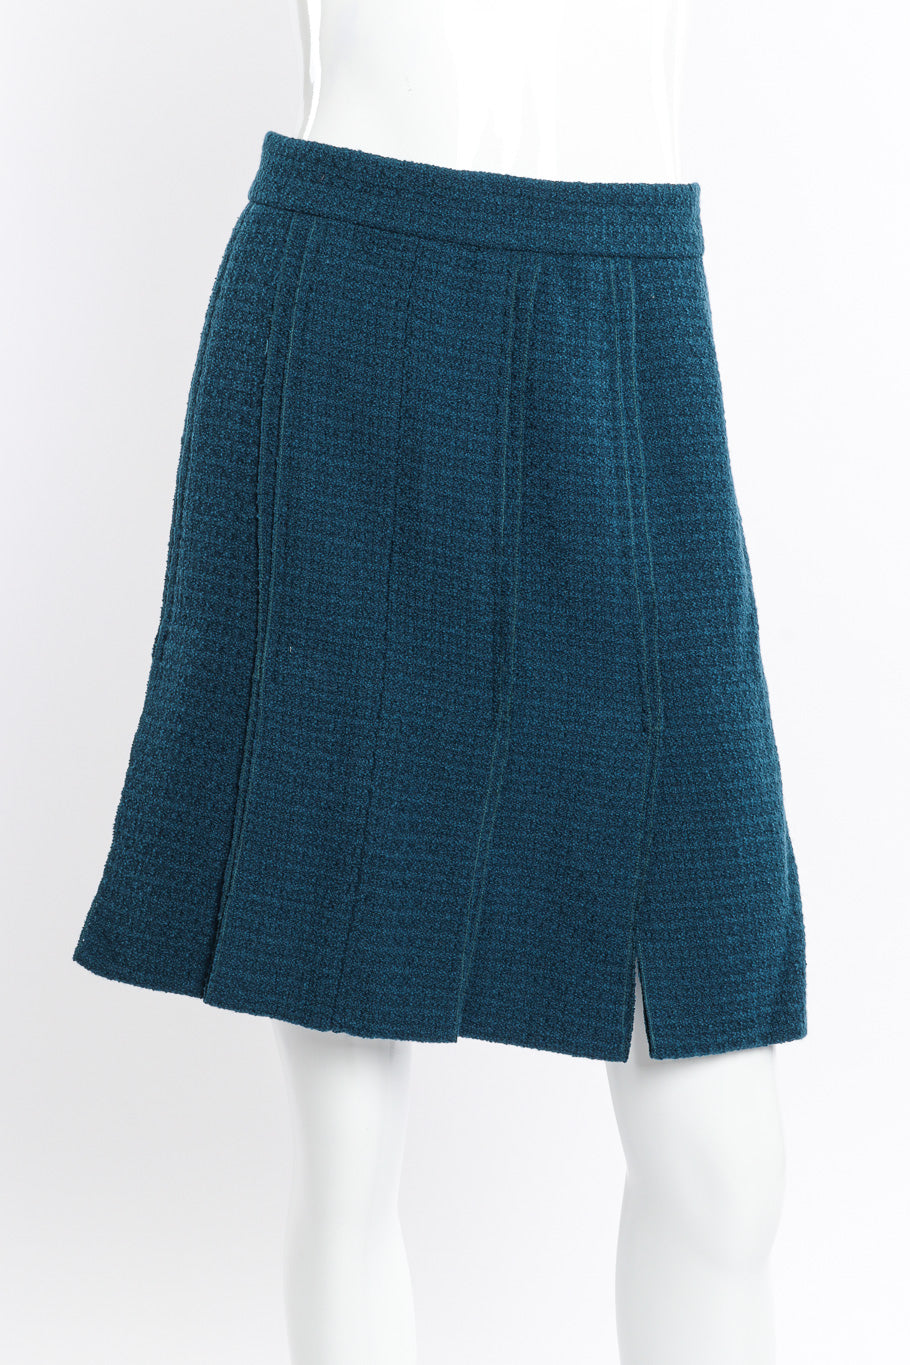 2008A Wool Carwash Hem Jacket & Skirt Set front view of skirt on mannequin @Recessla